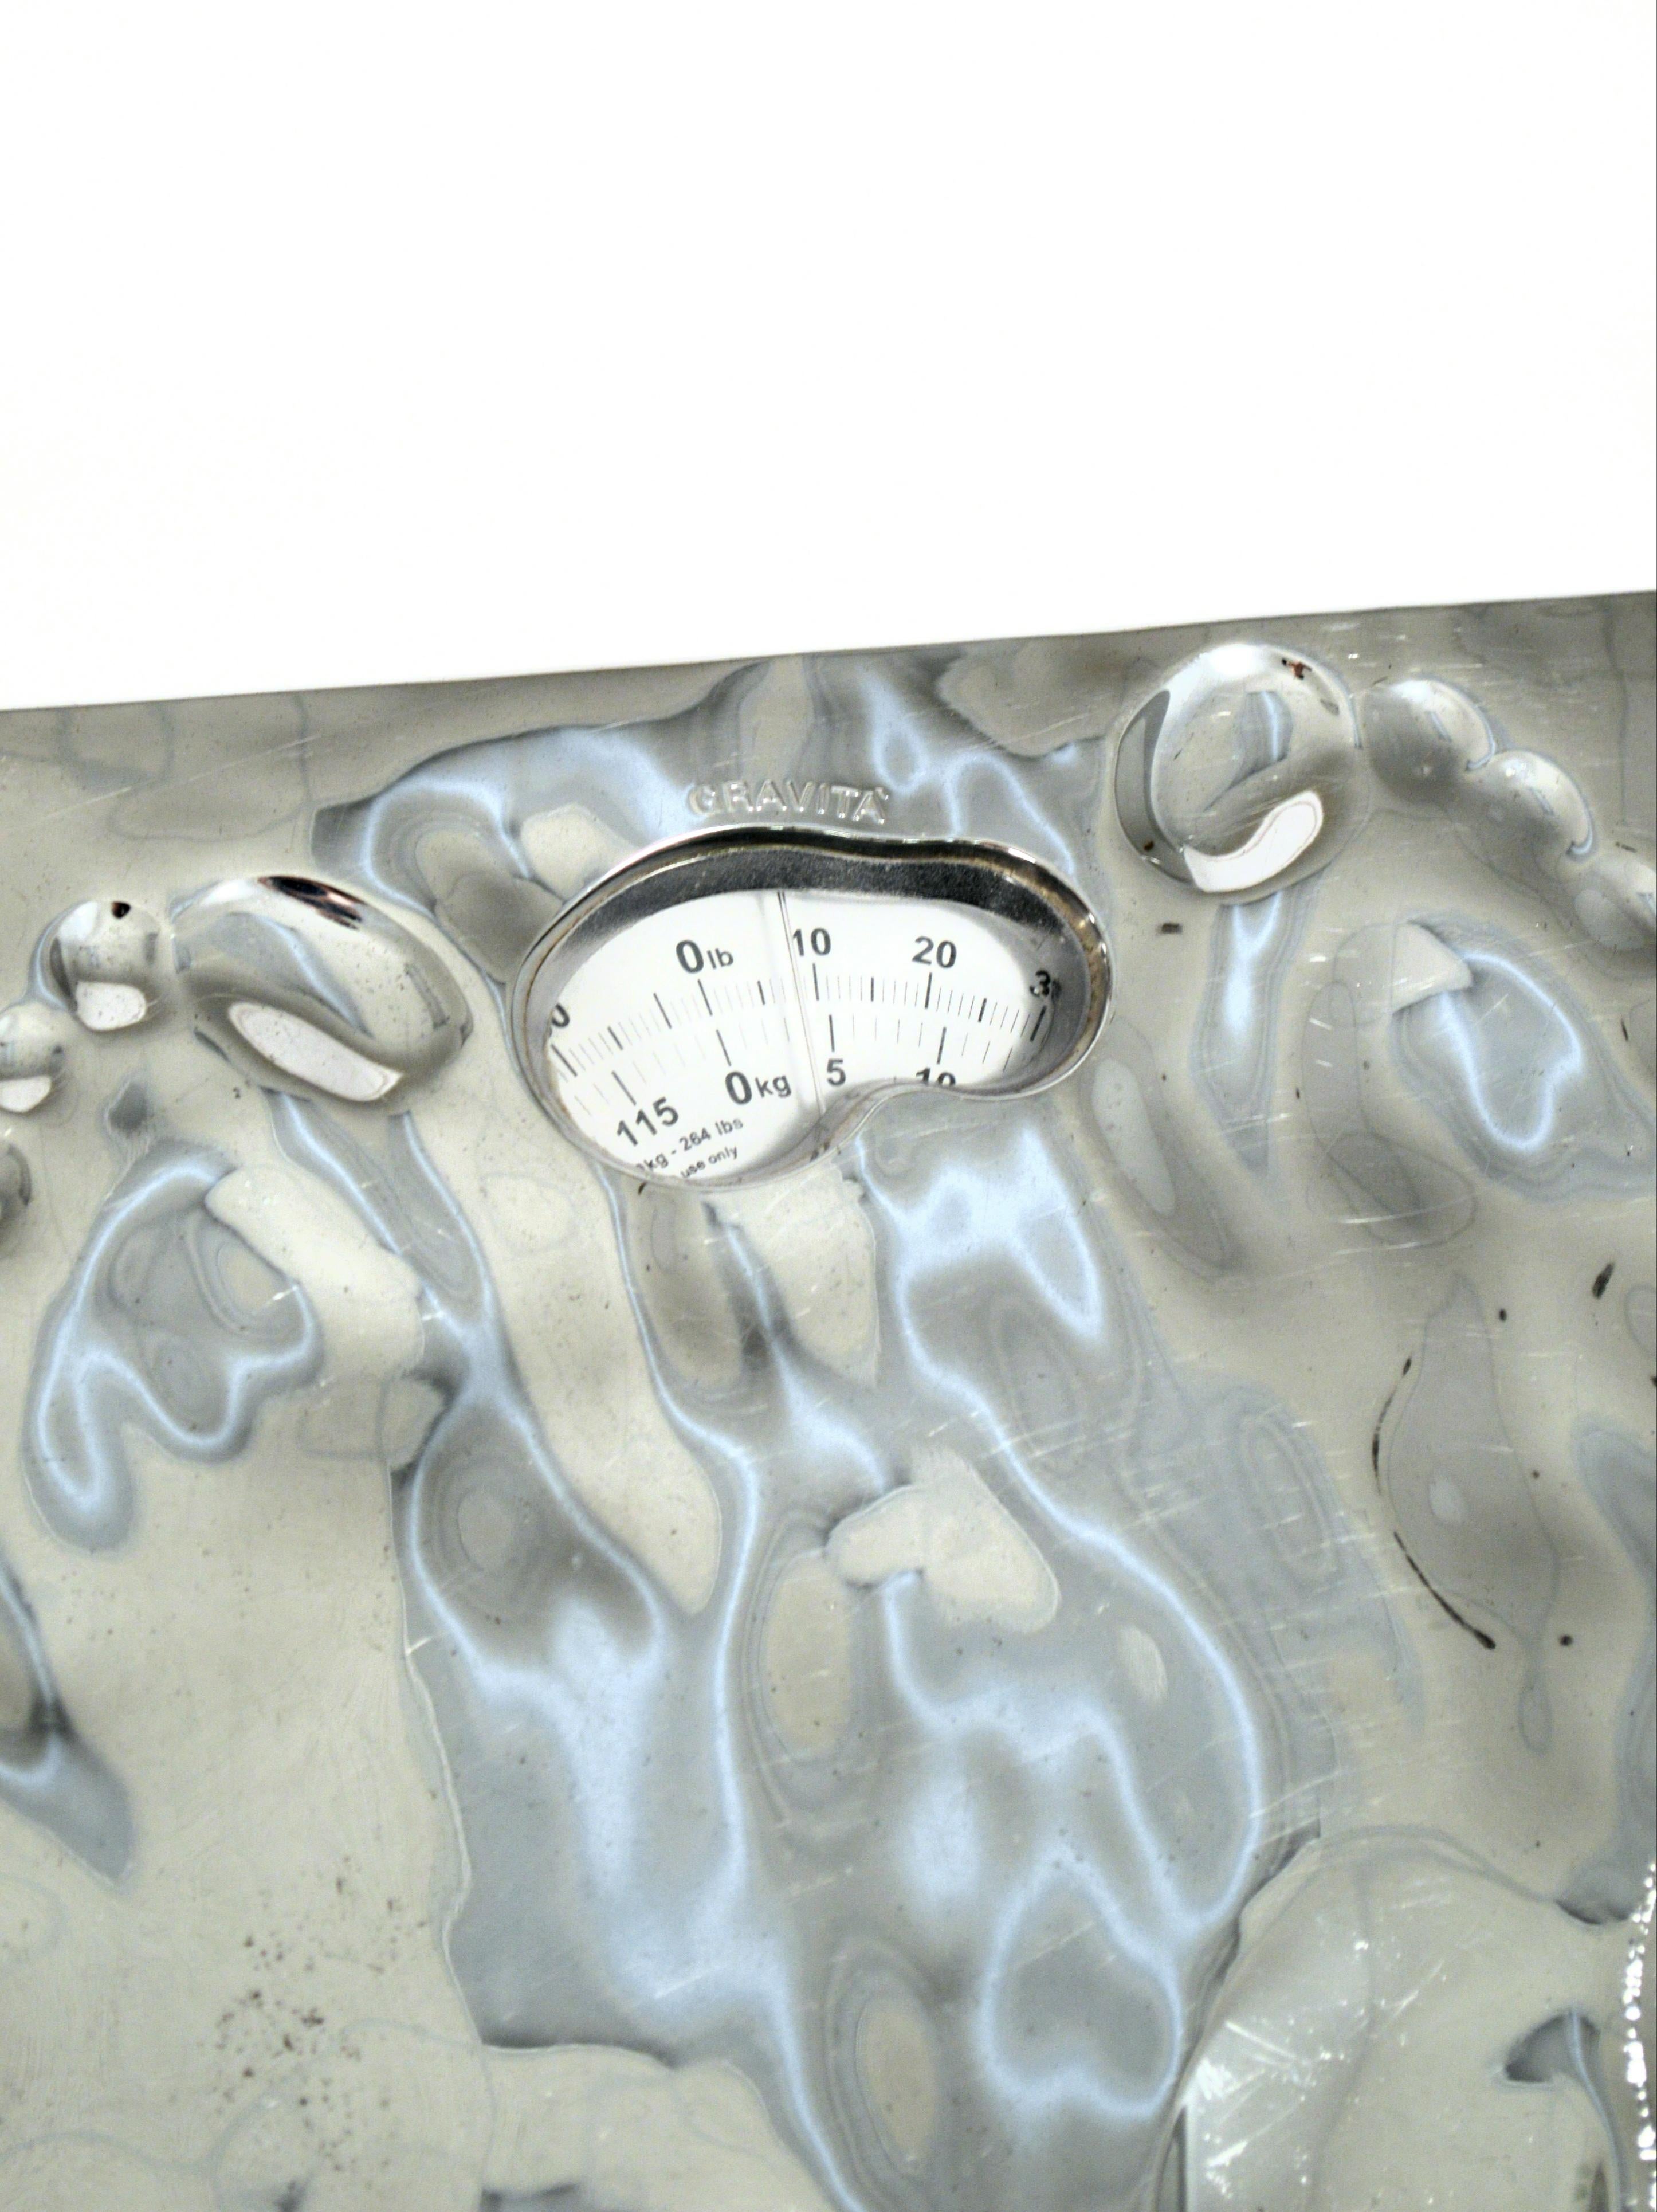 Metallic Post-Modern Bathroom Scale by Gravita For Sale 2